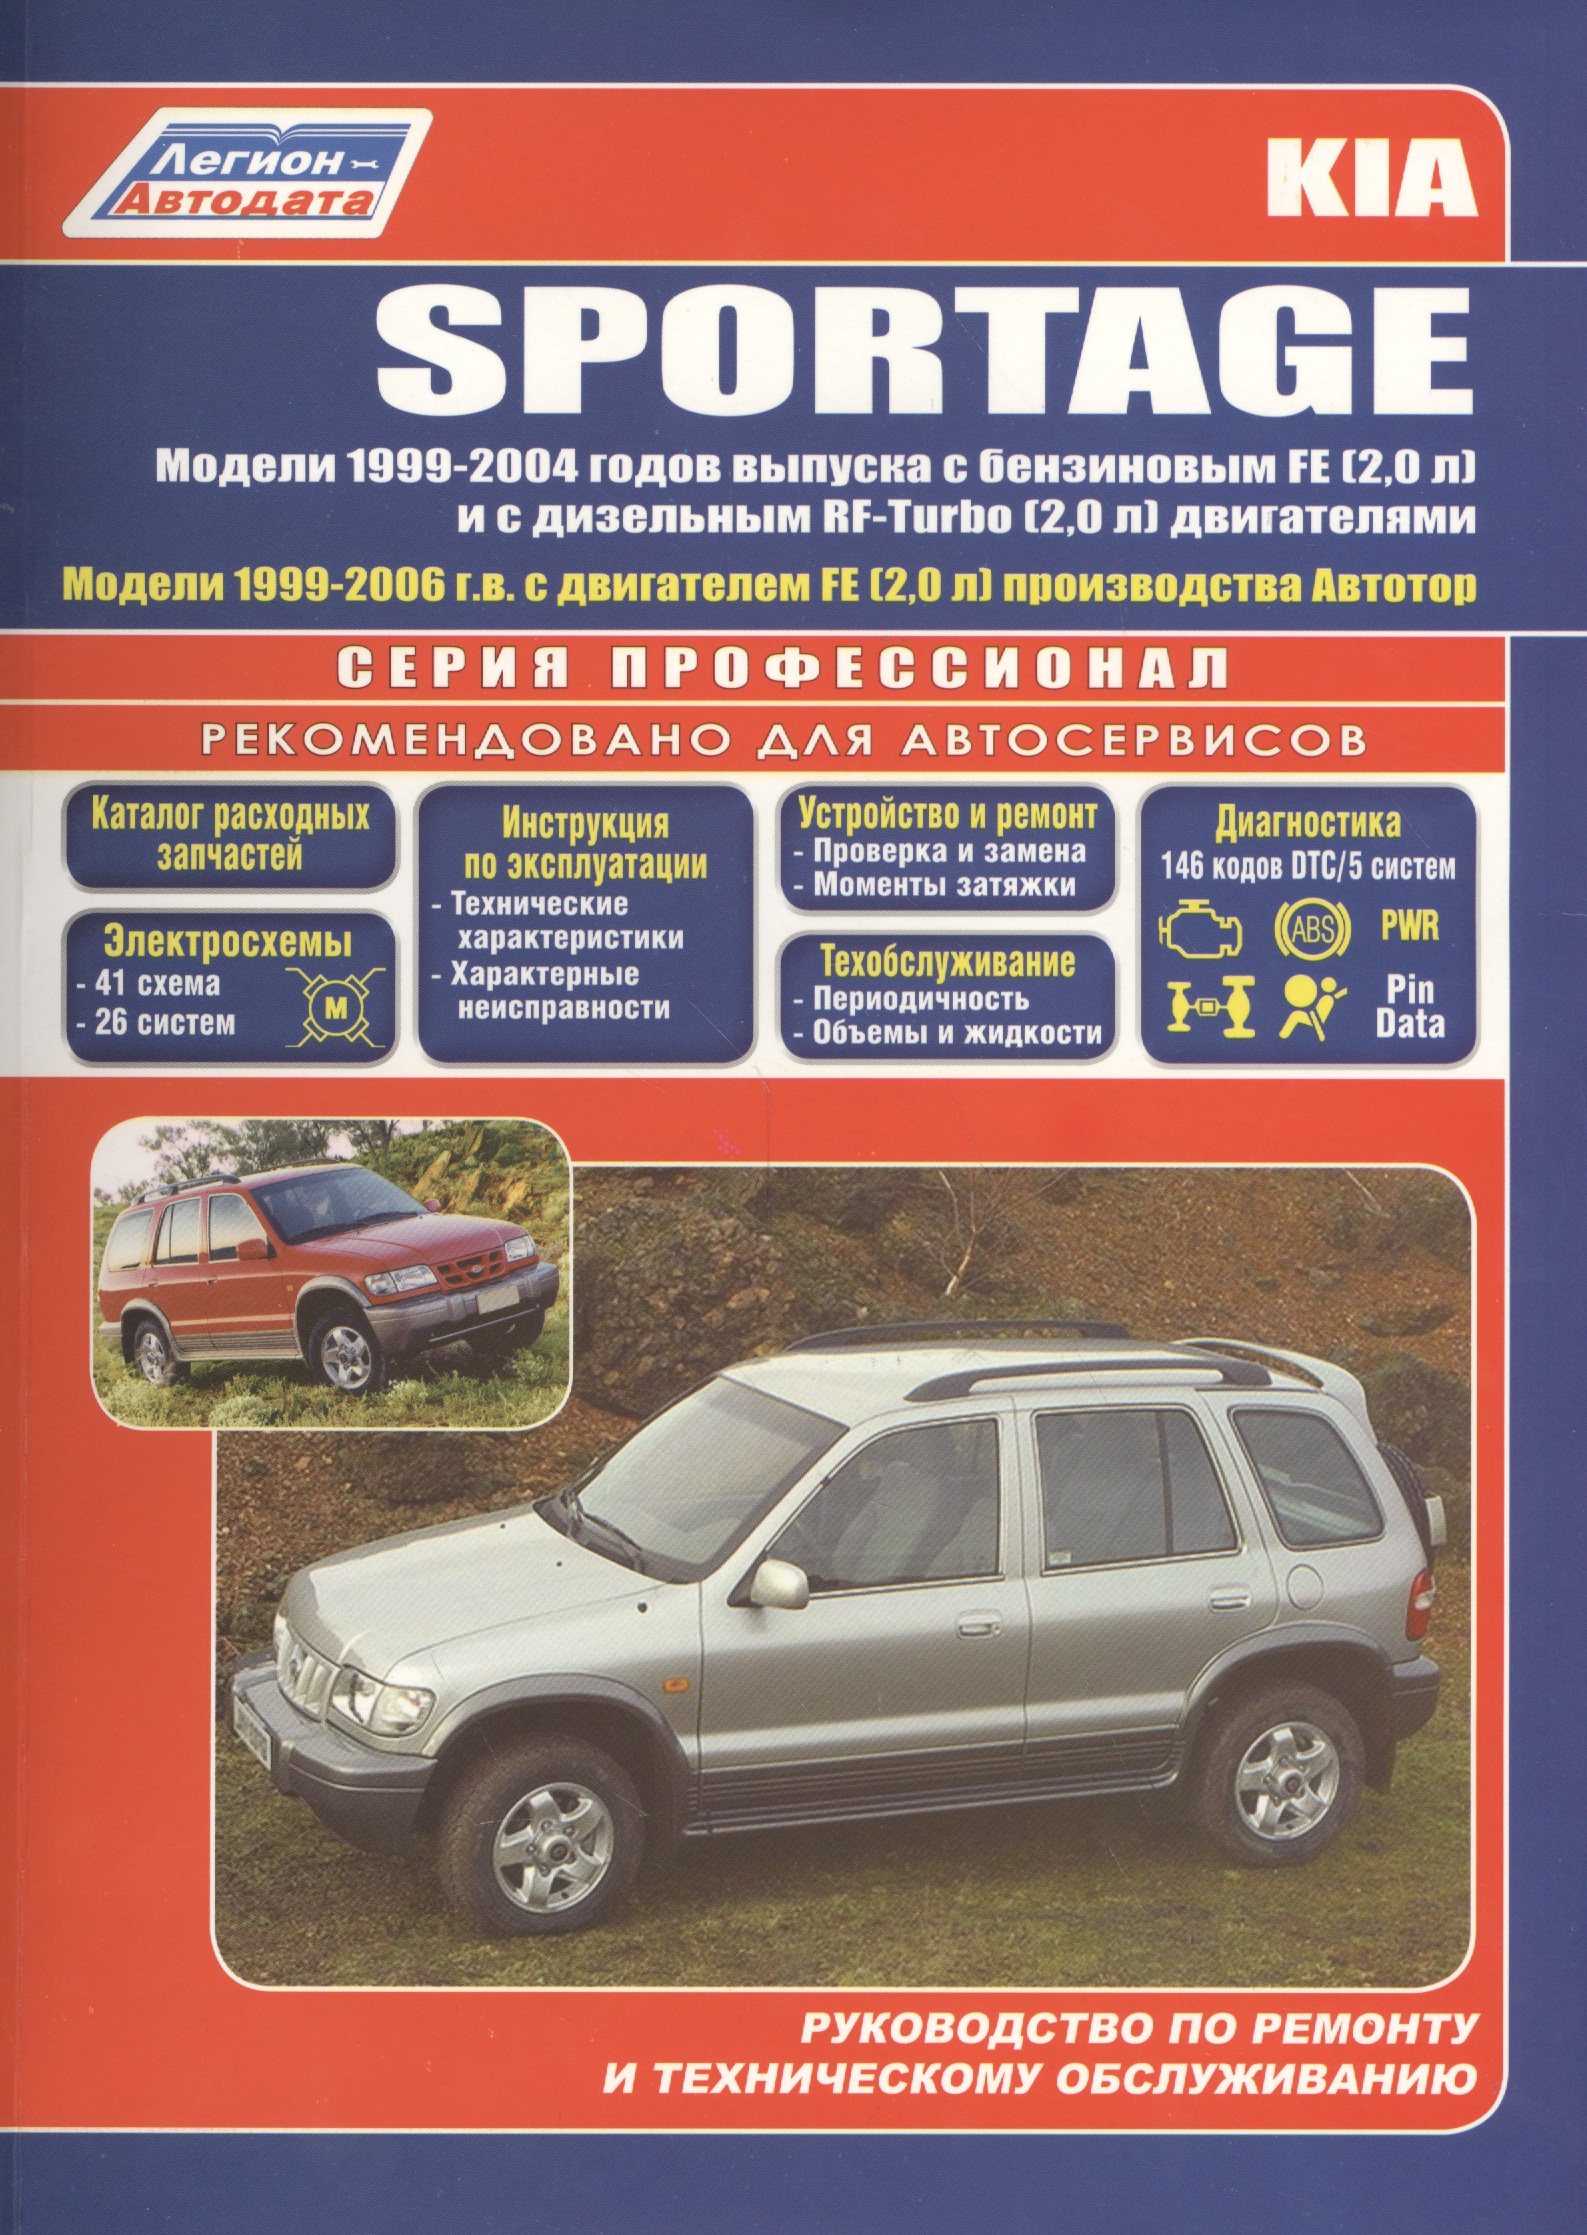 Kia Sportage Модели 2WD&4WD 1999-2004 г вып. с бенз. FE (2,0)…(мПрофессионал) kia sportage модели 2wd